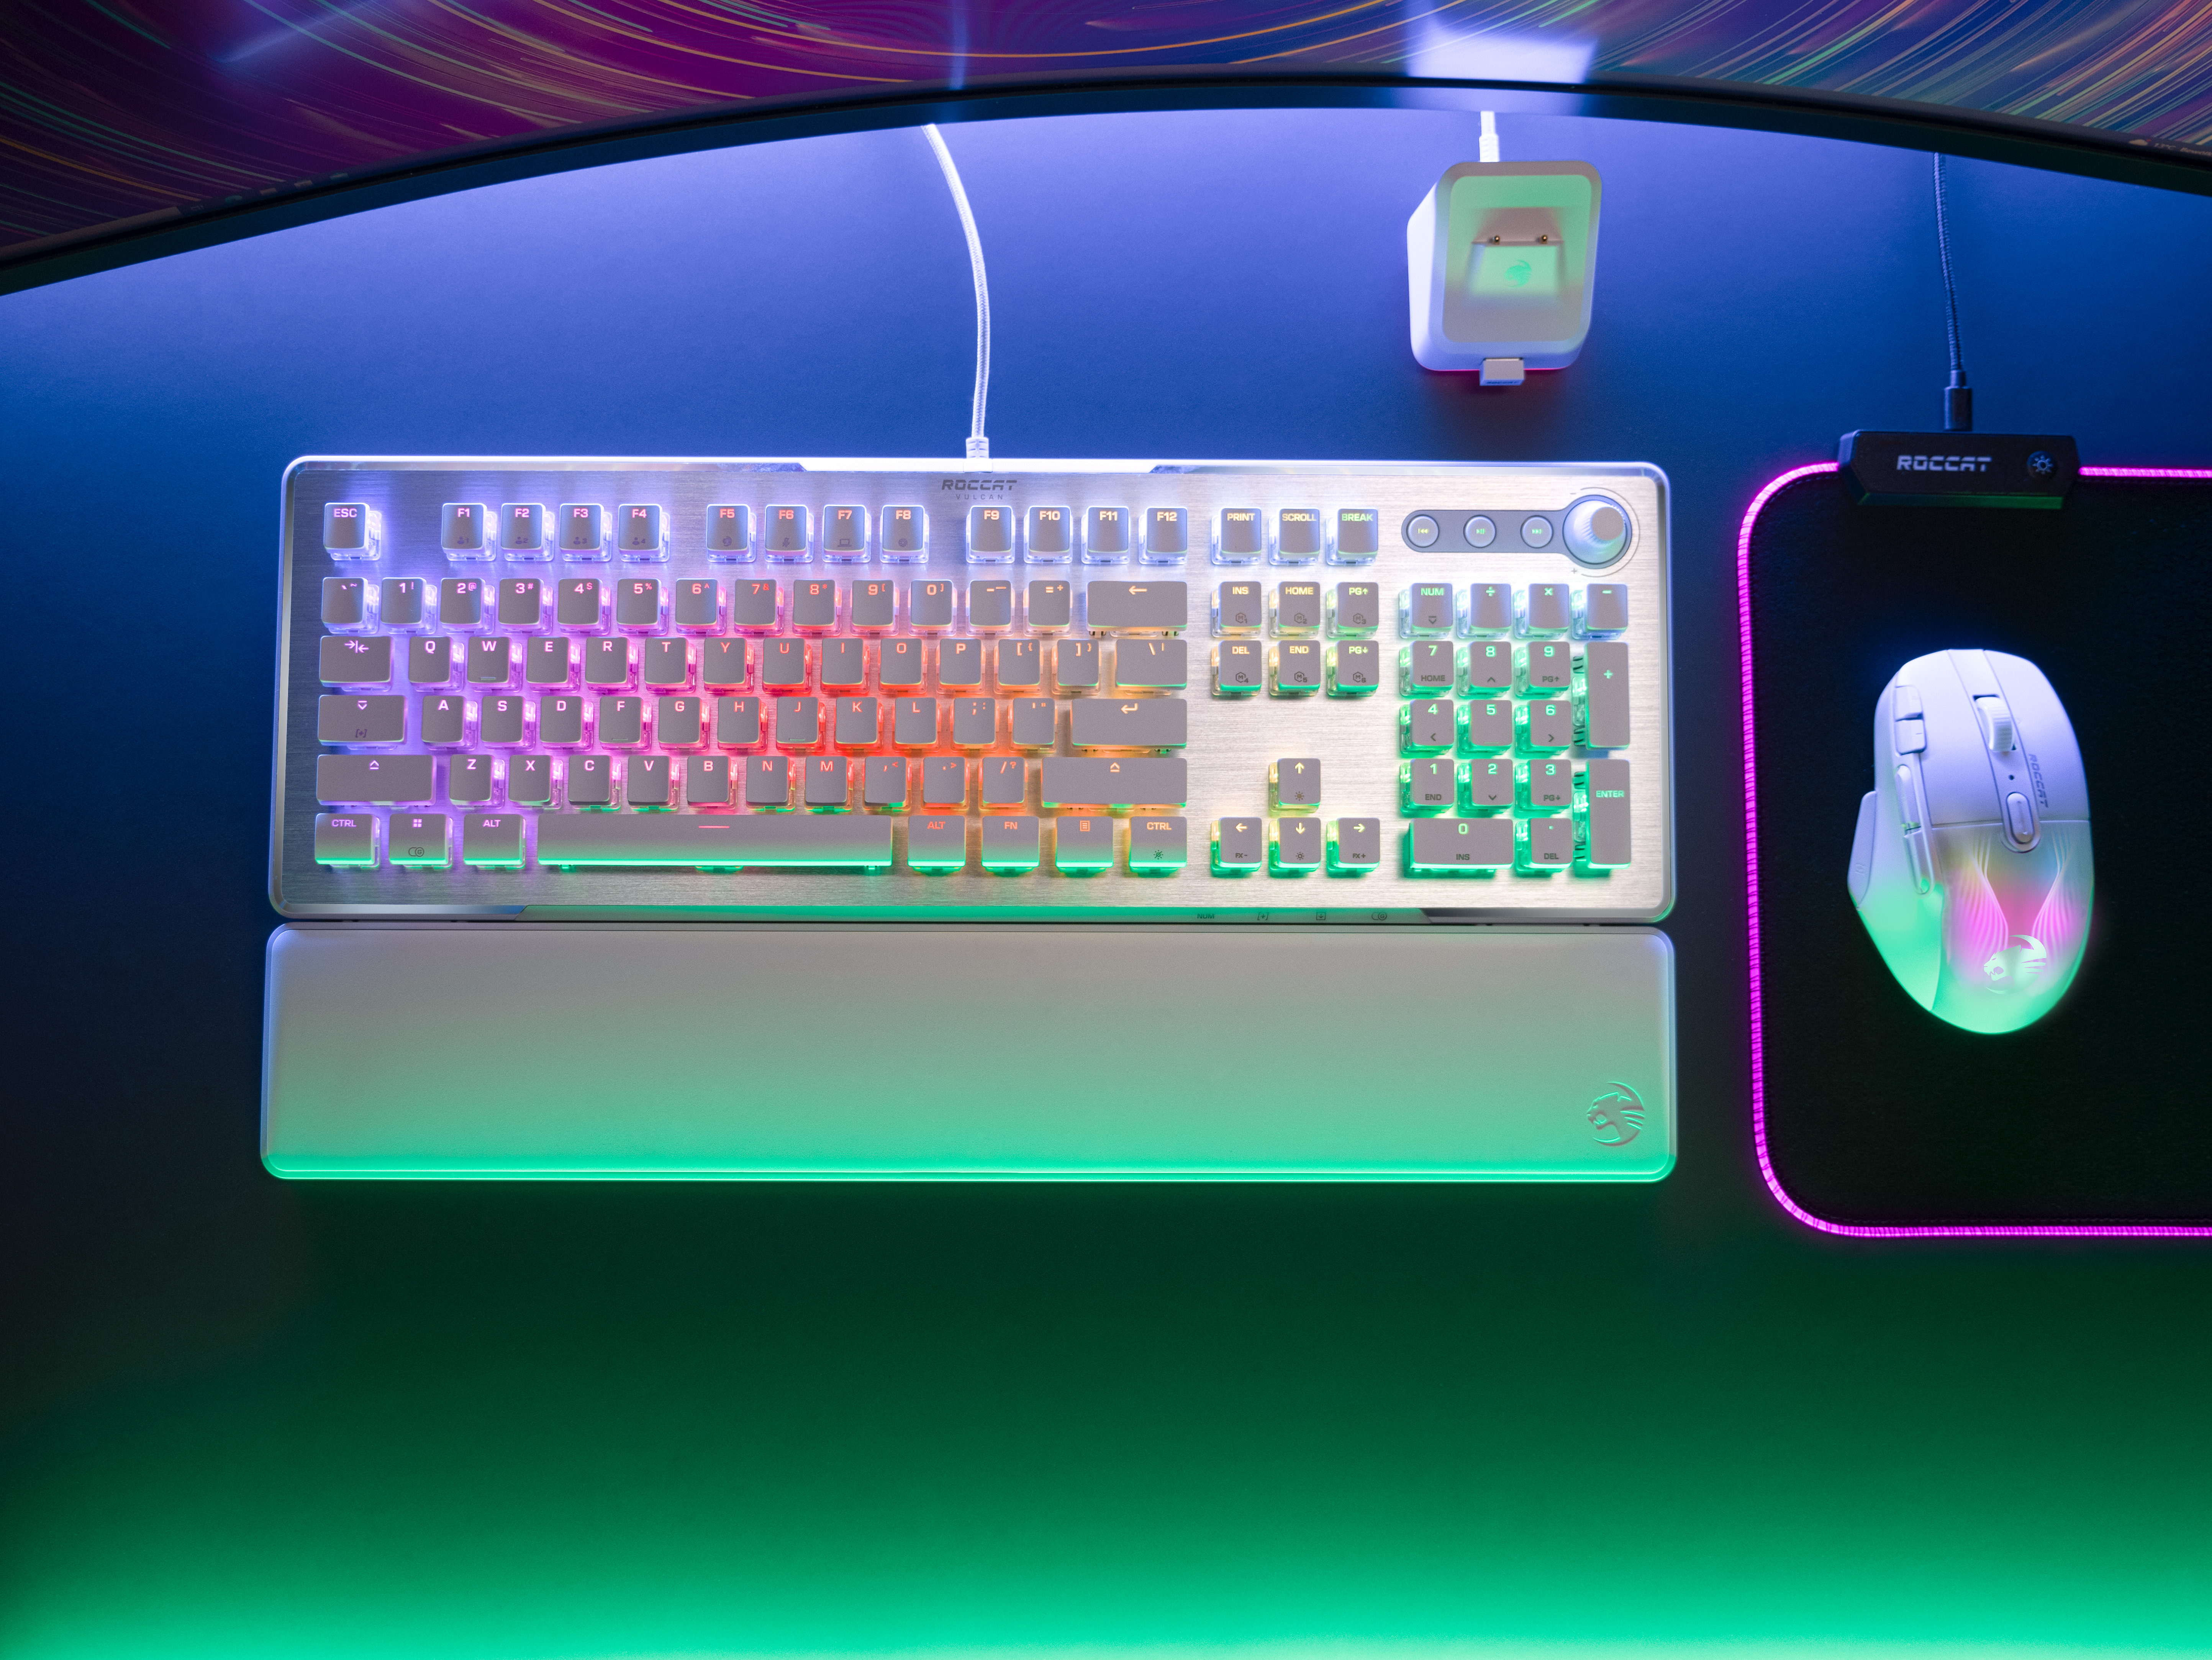 The Vulcan II Mechanical Gaming Keyboard product image (ROCCAT)